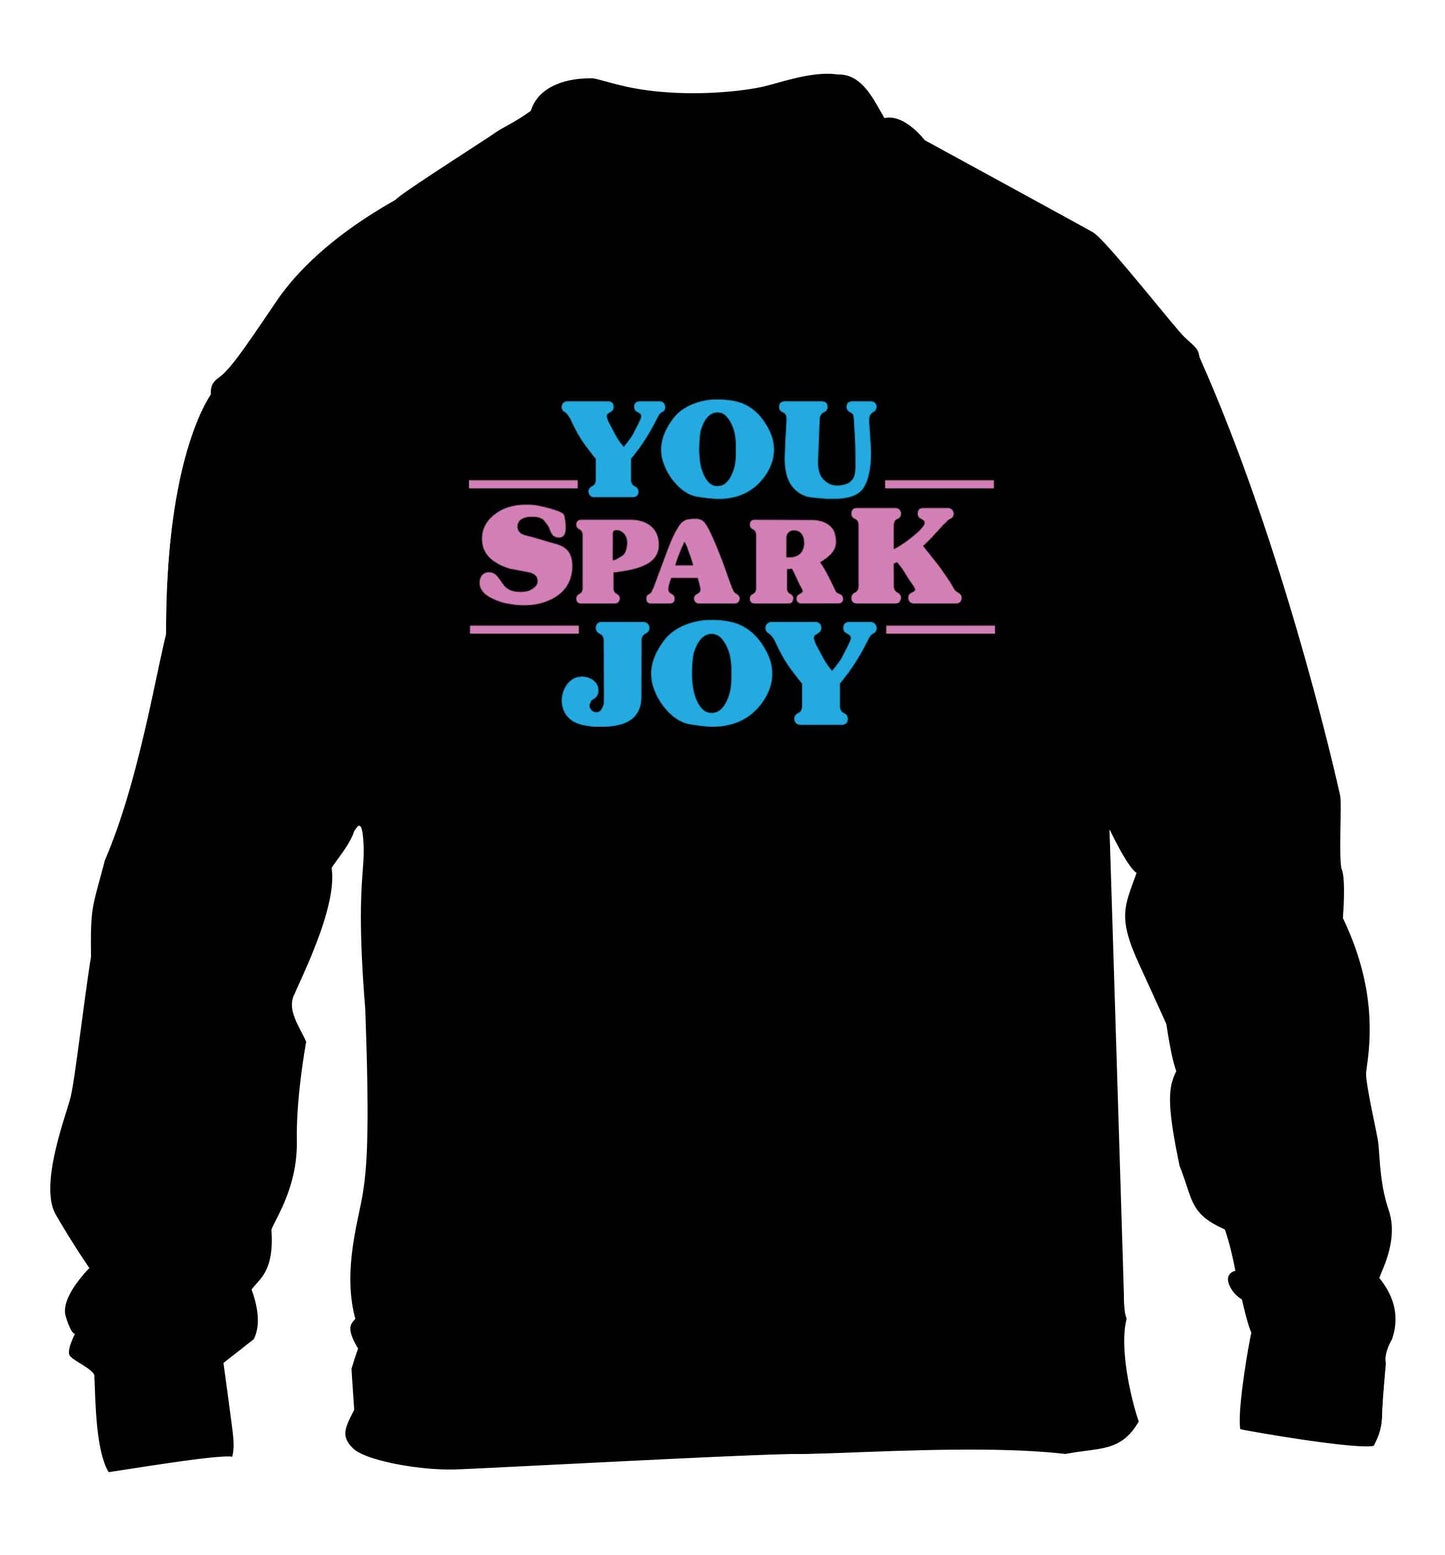 You spark joy children's black sweater 12-13 Years